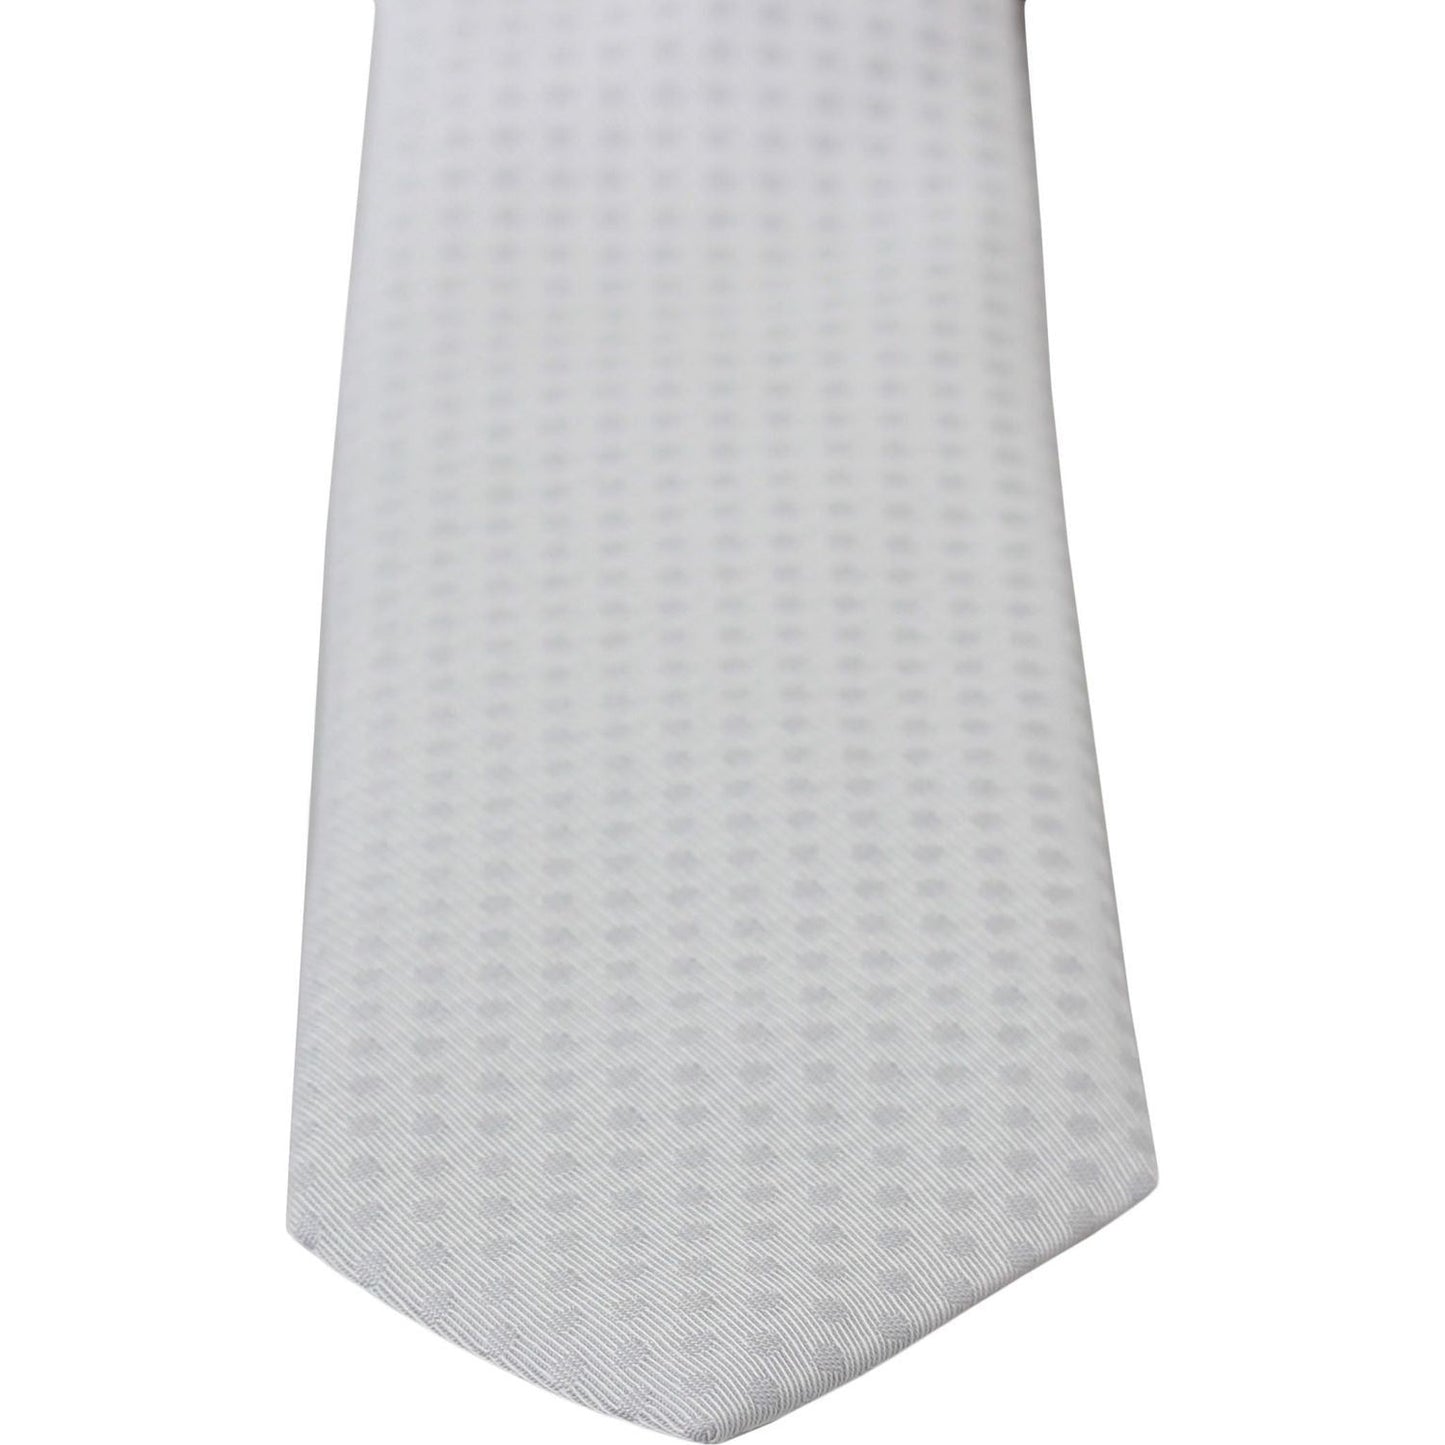 Dolce & Gabbana Elegant White Patterned Silk Blend Neck Tie white-patterned-classic-mens-slim-necktie-tie Necktie IMG_1757-0b73c29f-2b8.jpg